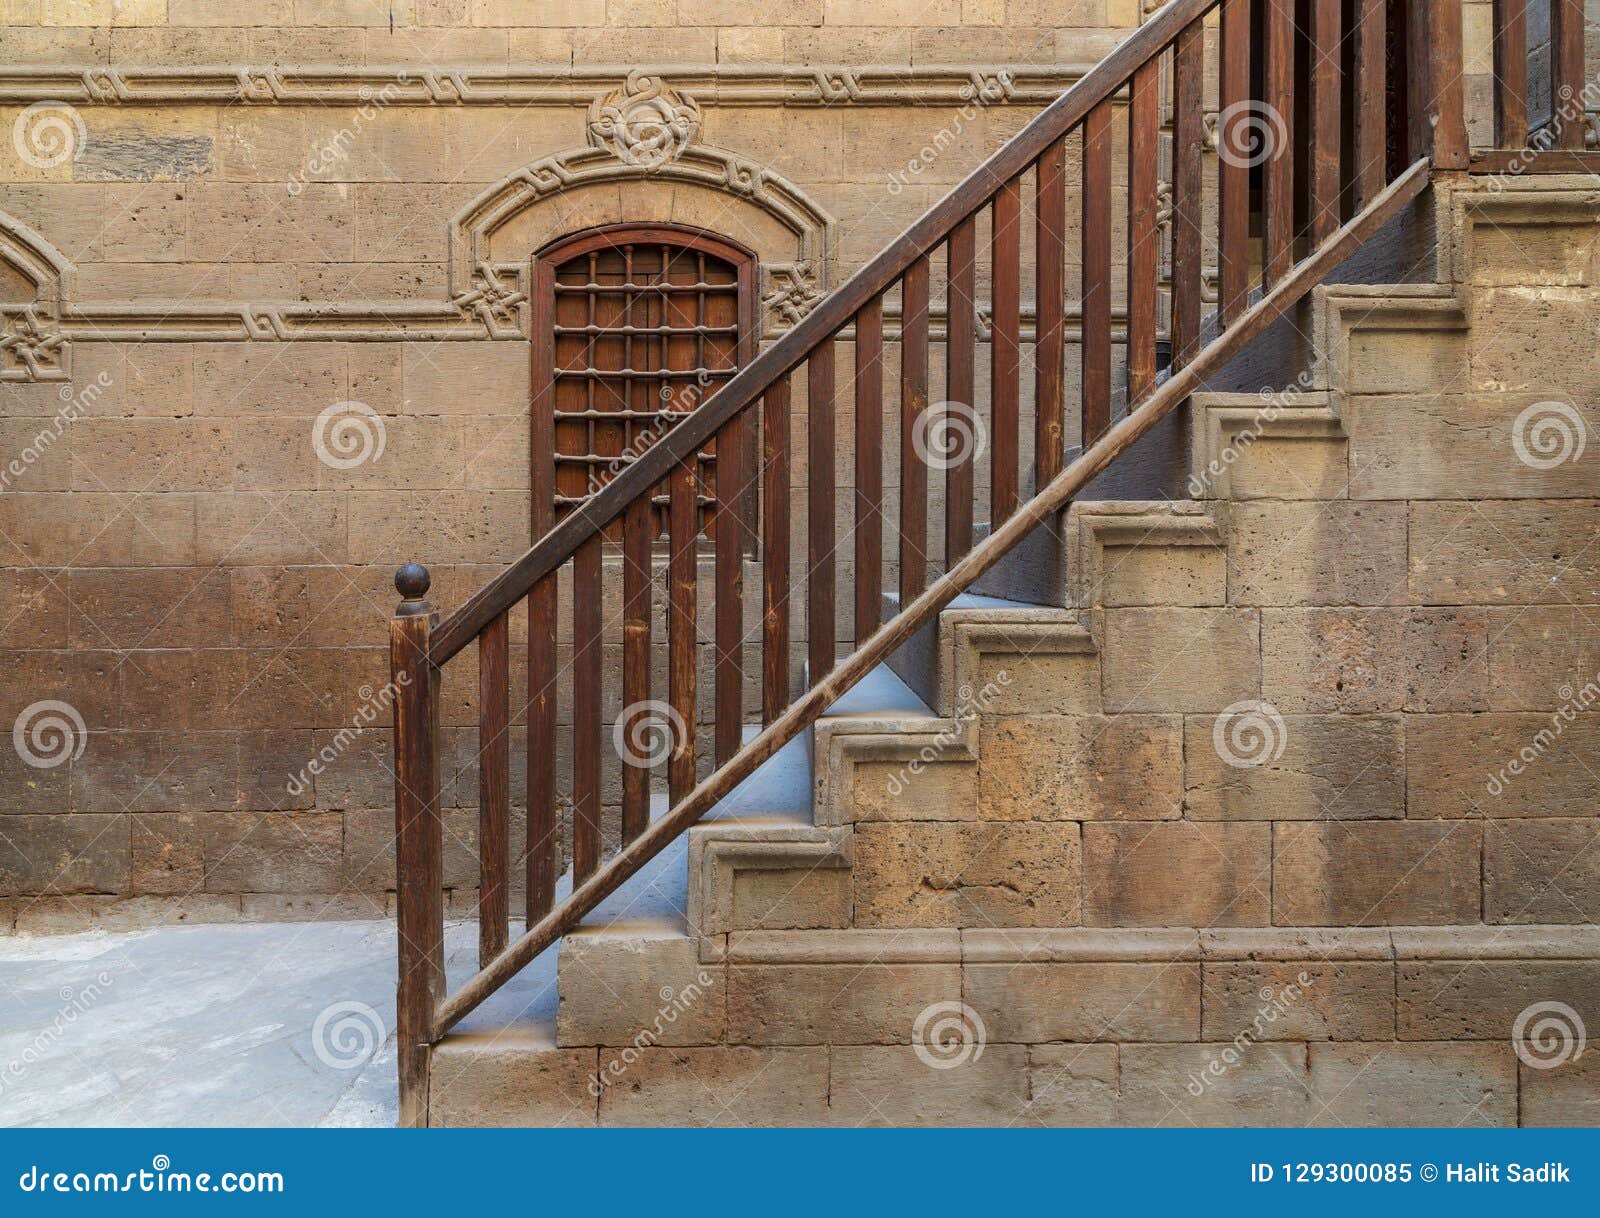 staircase with wooden balustrade leading to zeinab khatoun historic house, old cairo, egypt